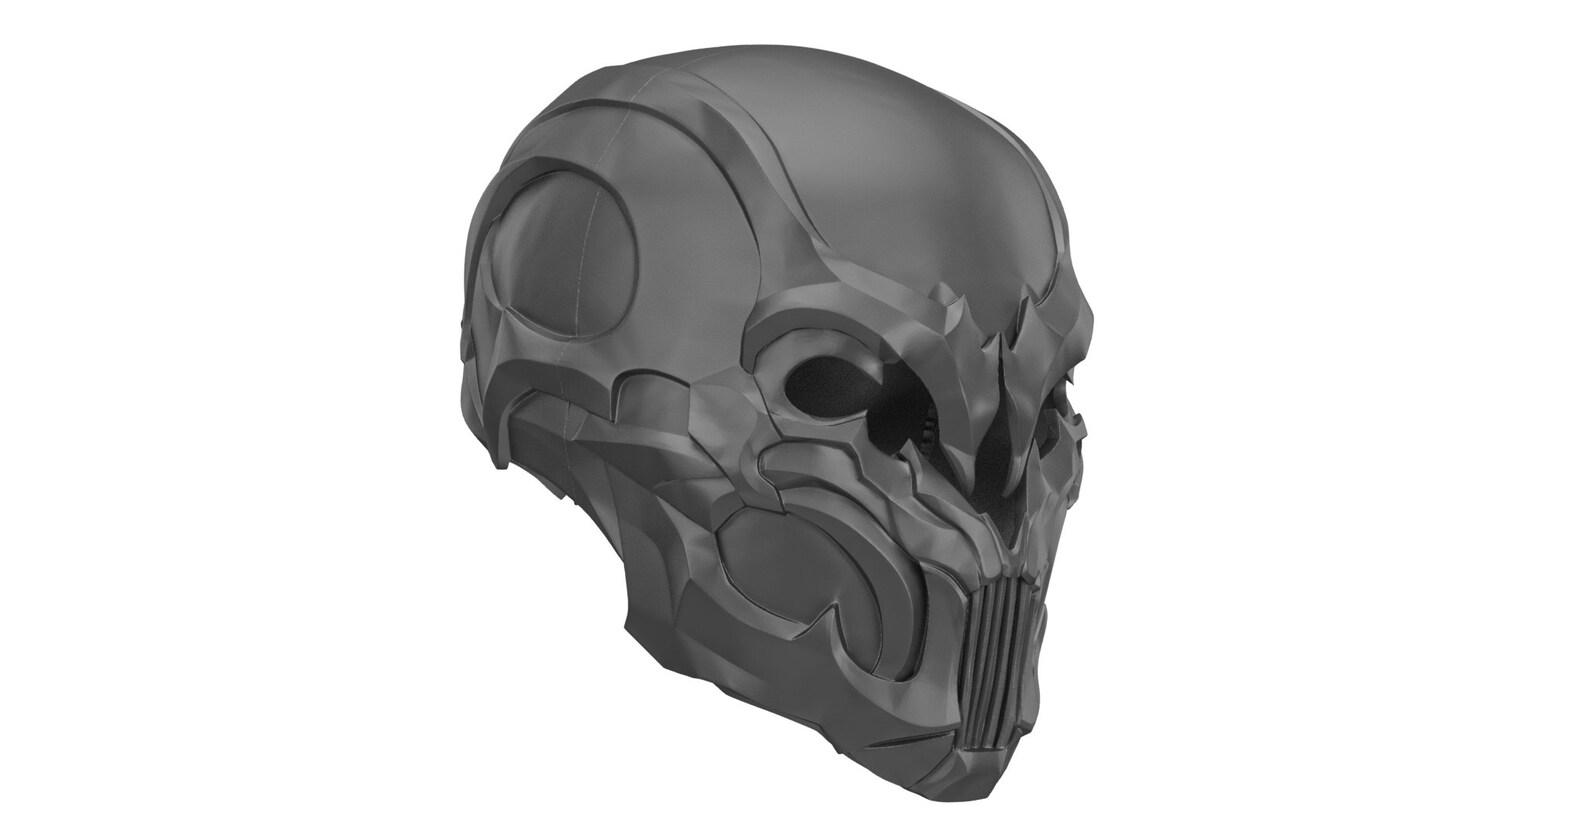 Noob Saibot halloween death helmet mask 3d model